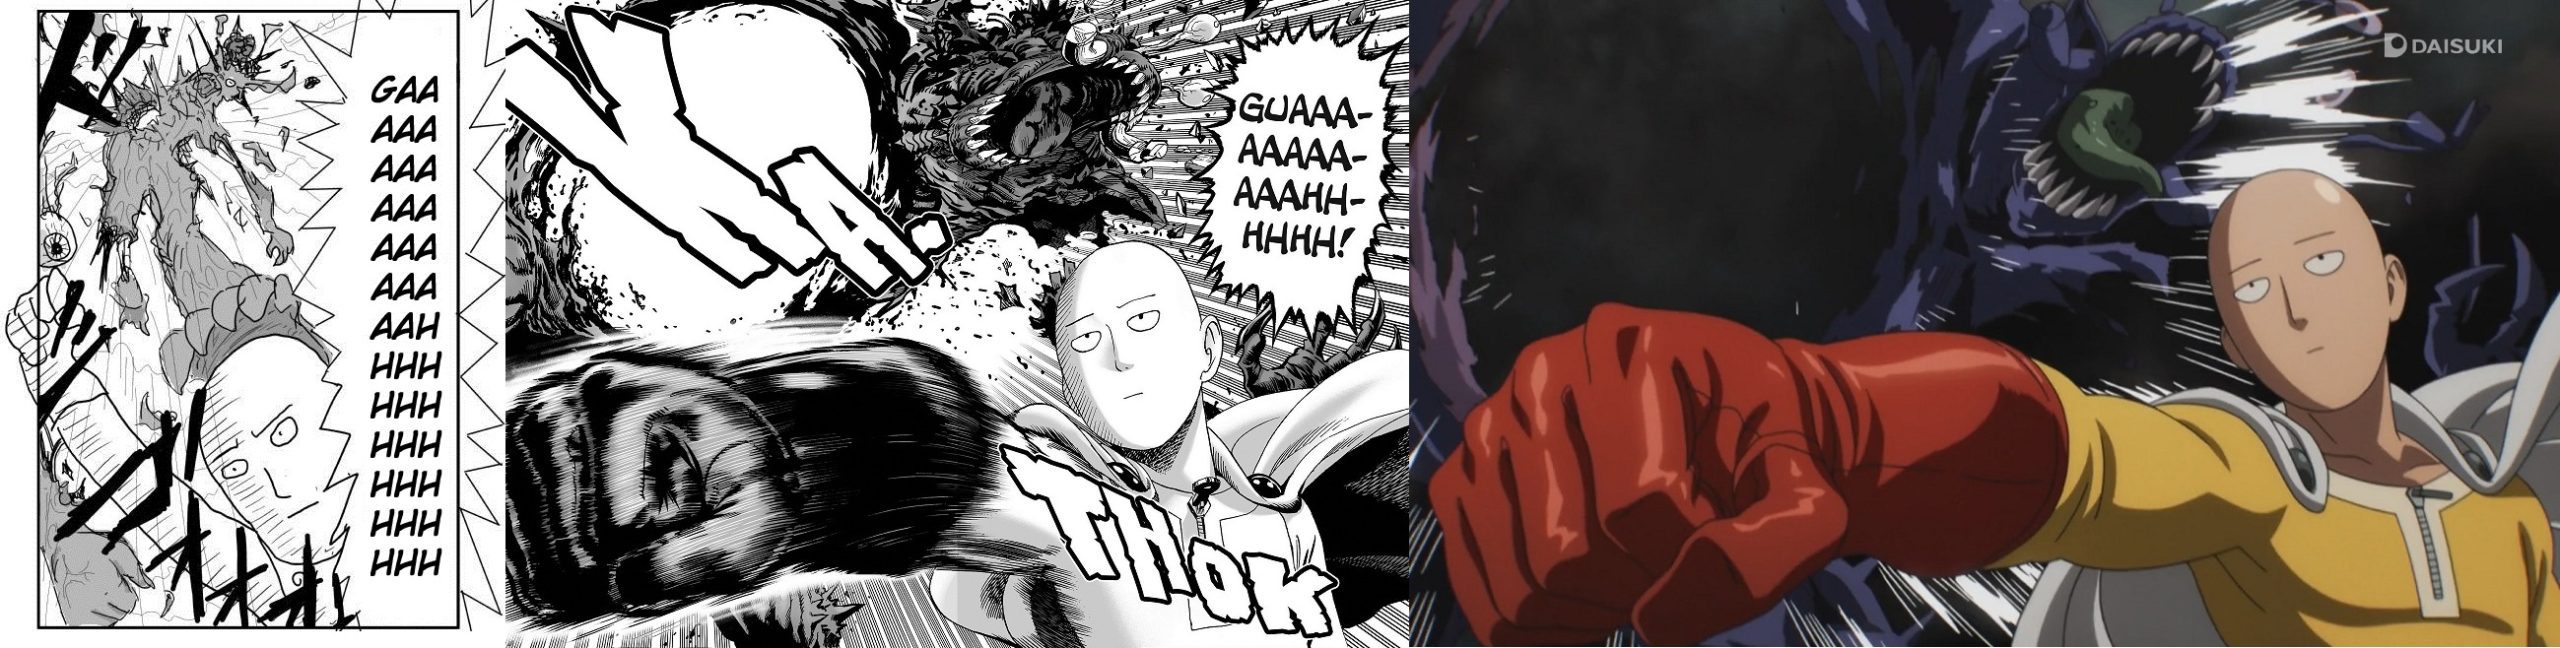 One Punch Man Original-Manga vs. Manga vs. Anime neu zeichnen